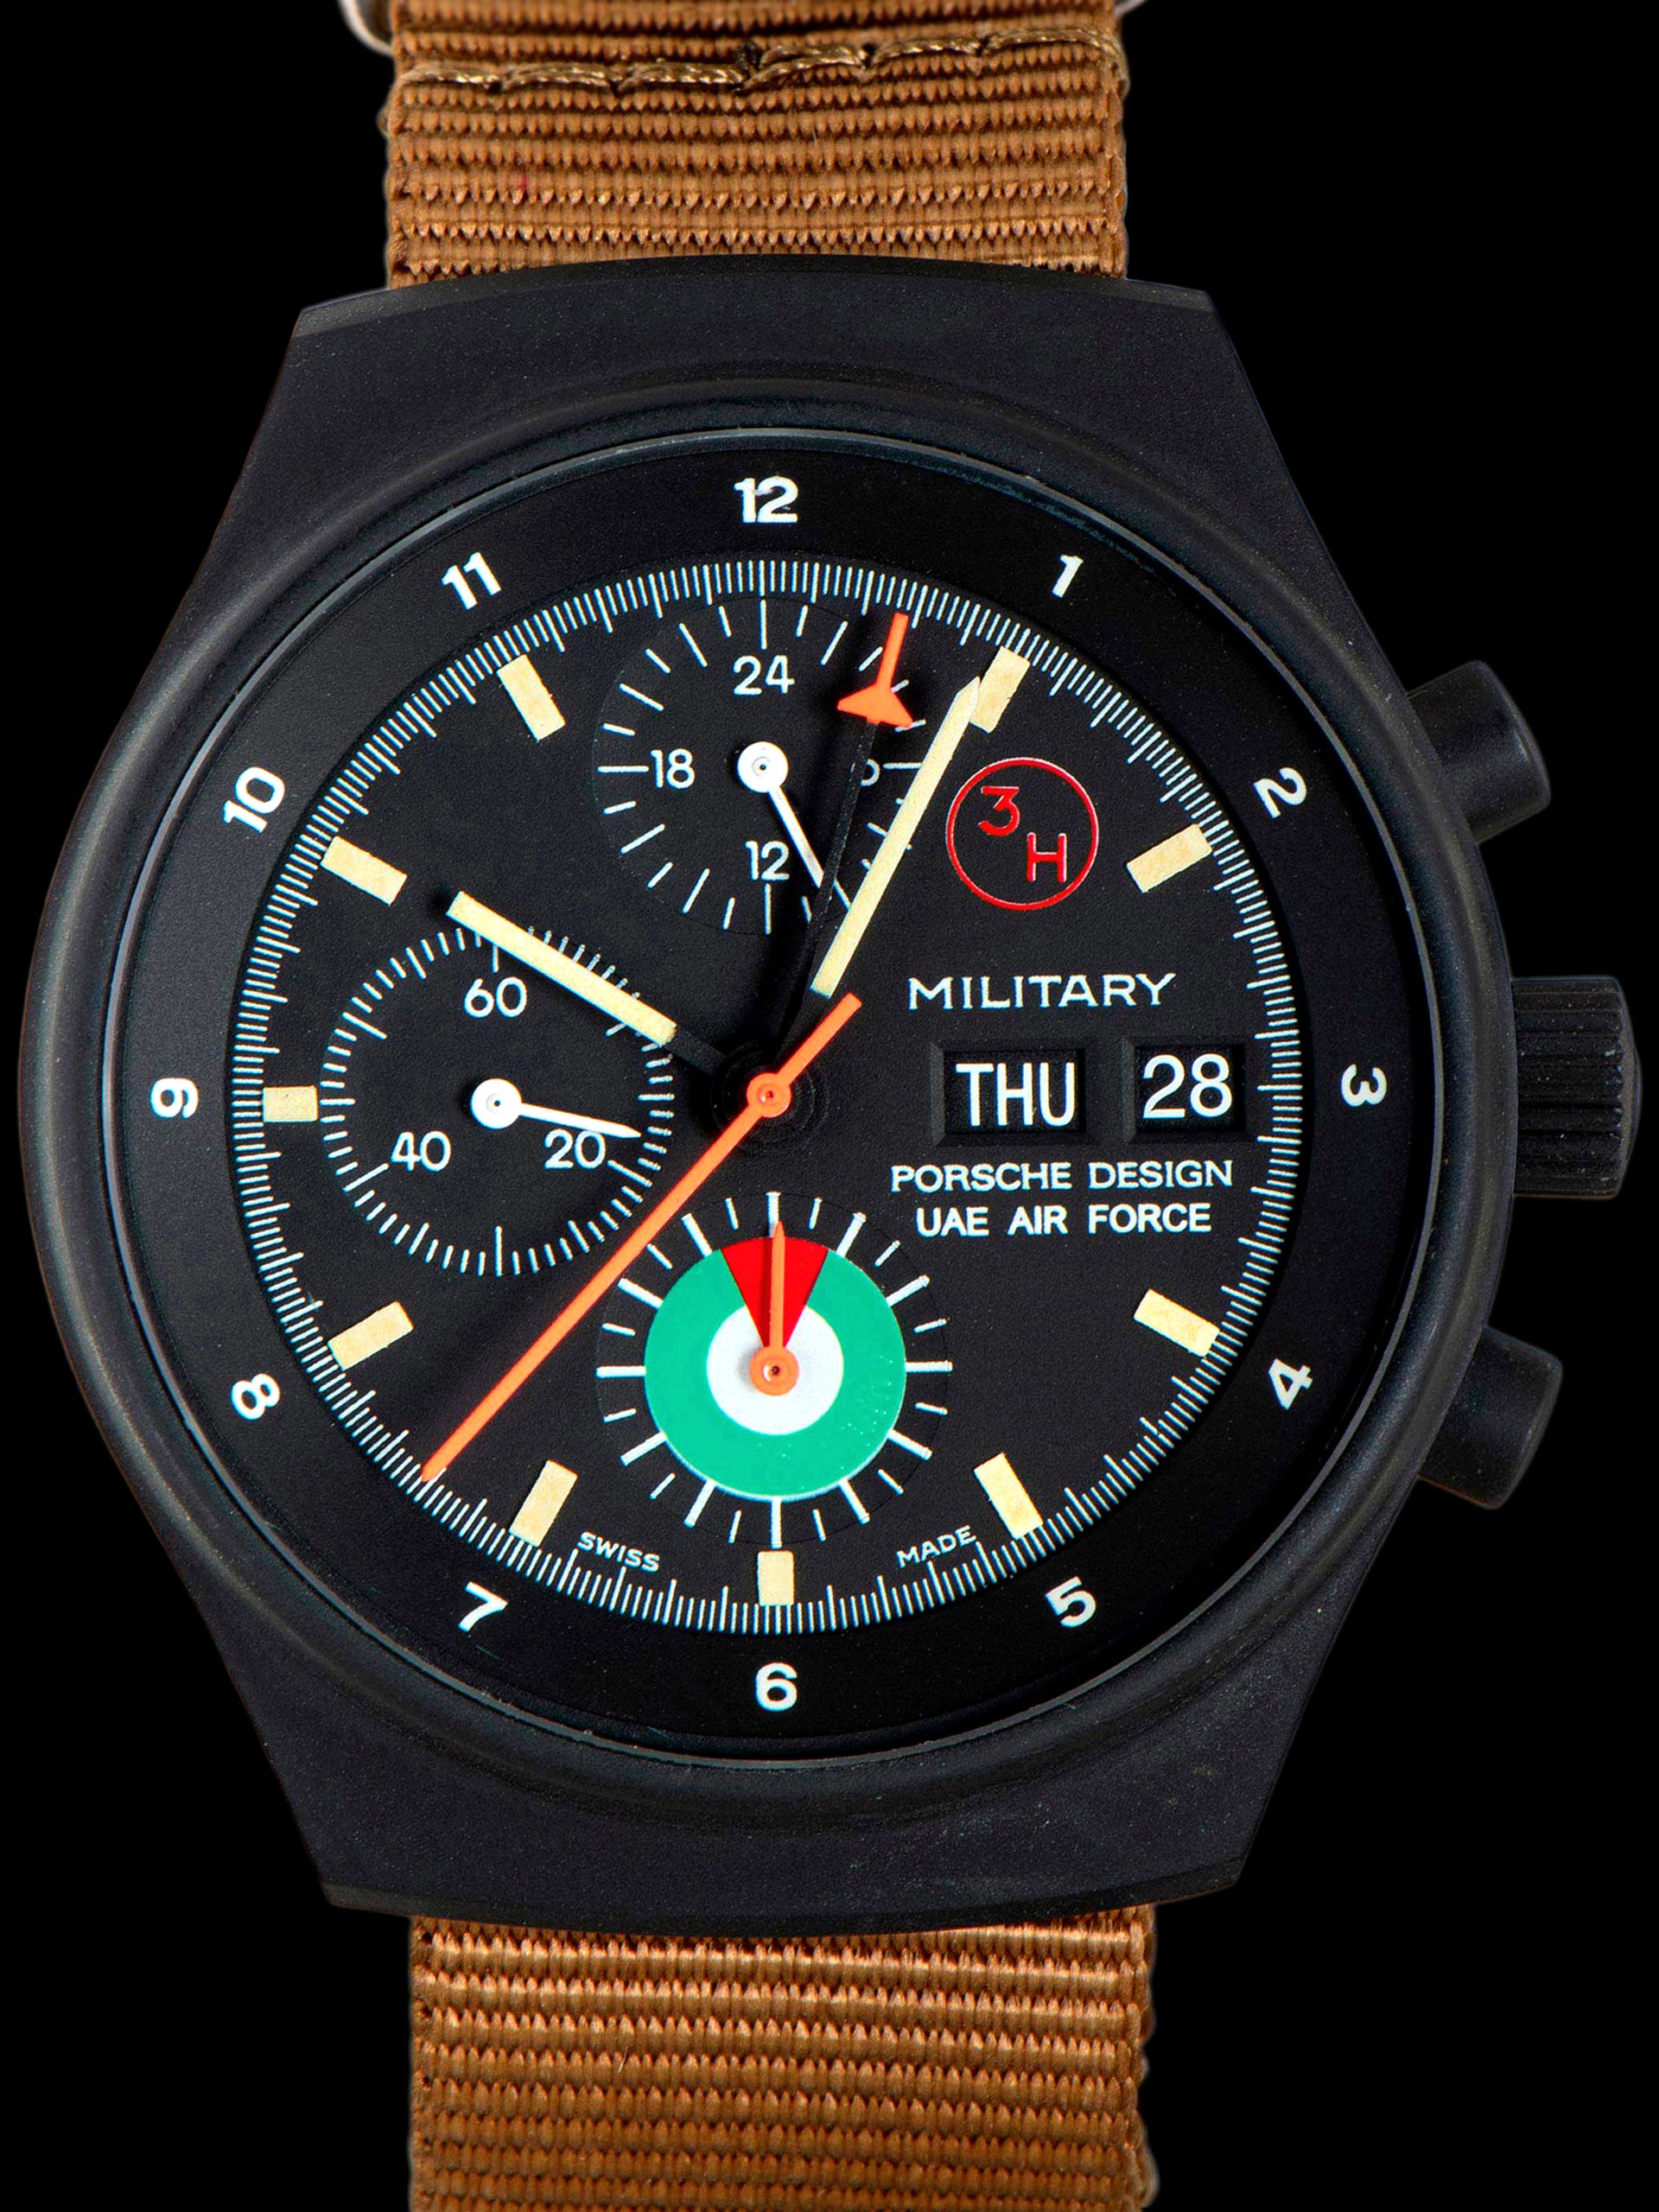 *NOS* Porsche Design Military Chronograph PVD (Ref. 7177) "UAE Air Force"